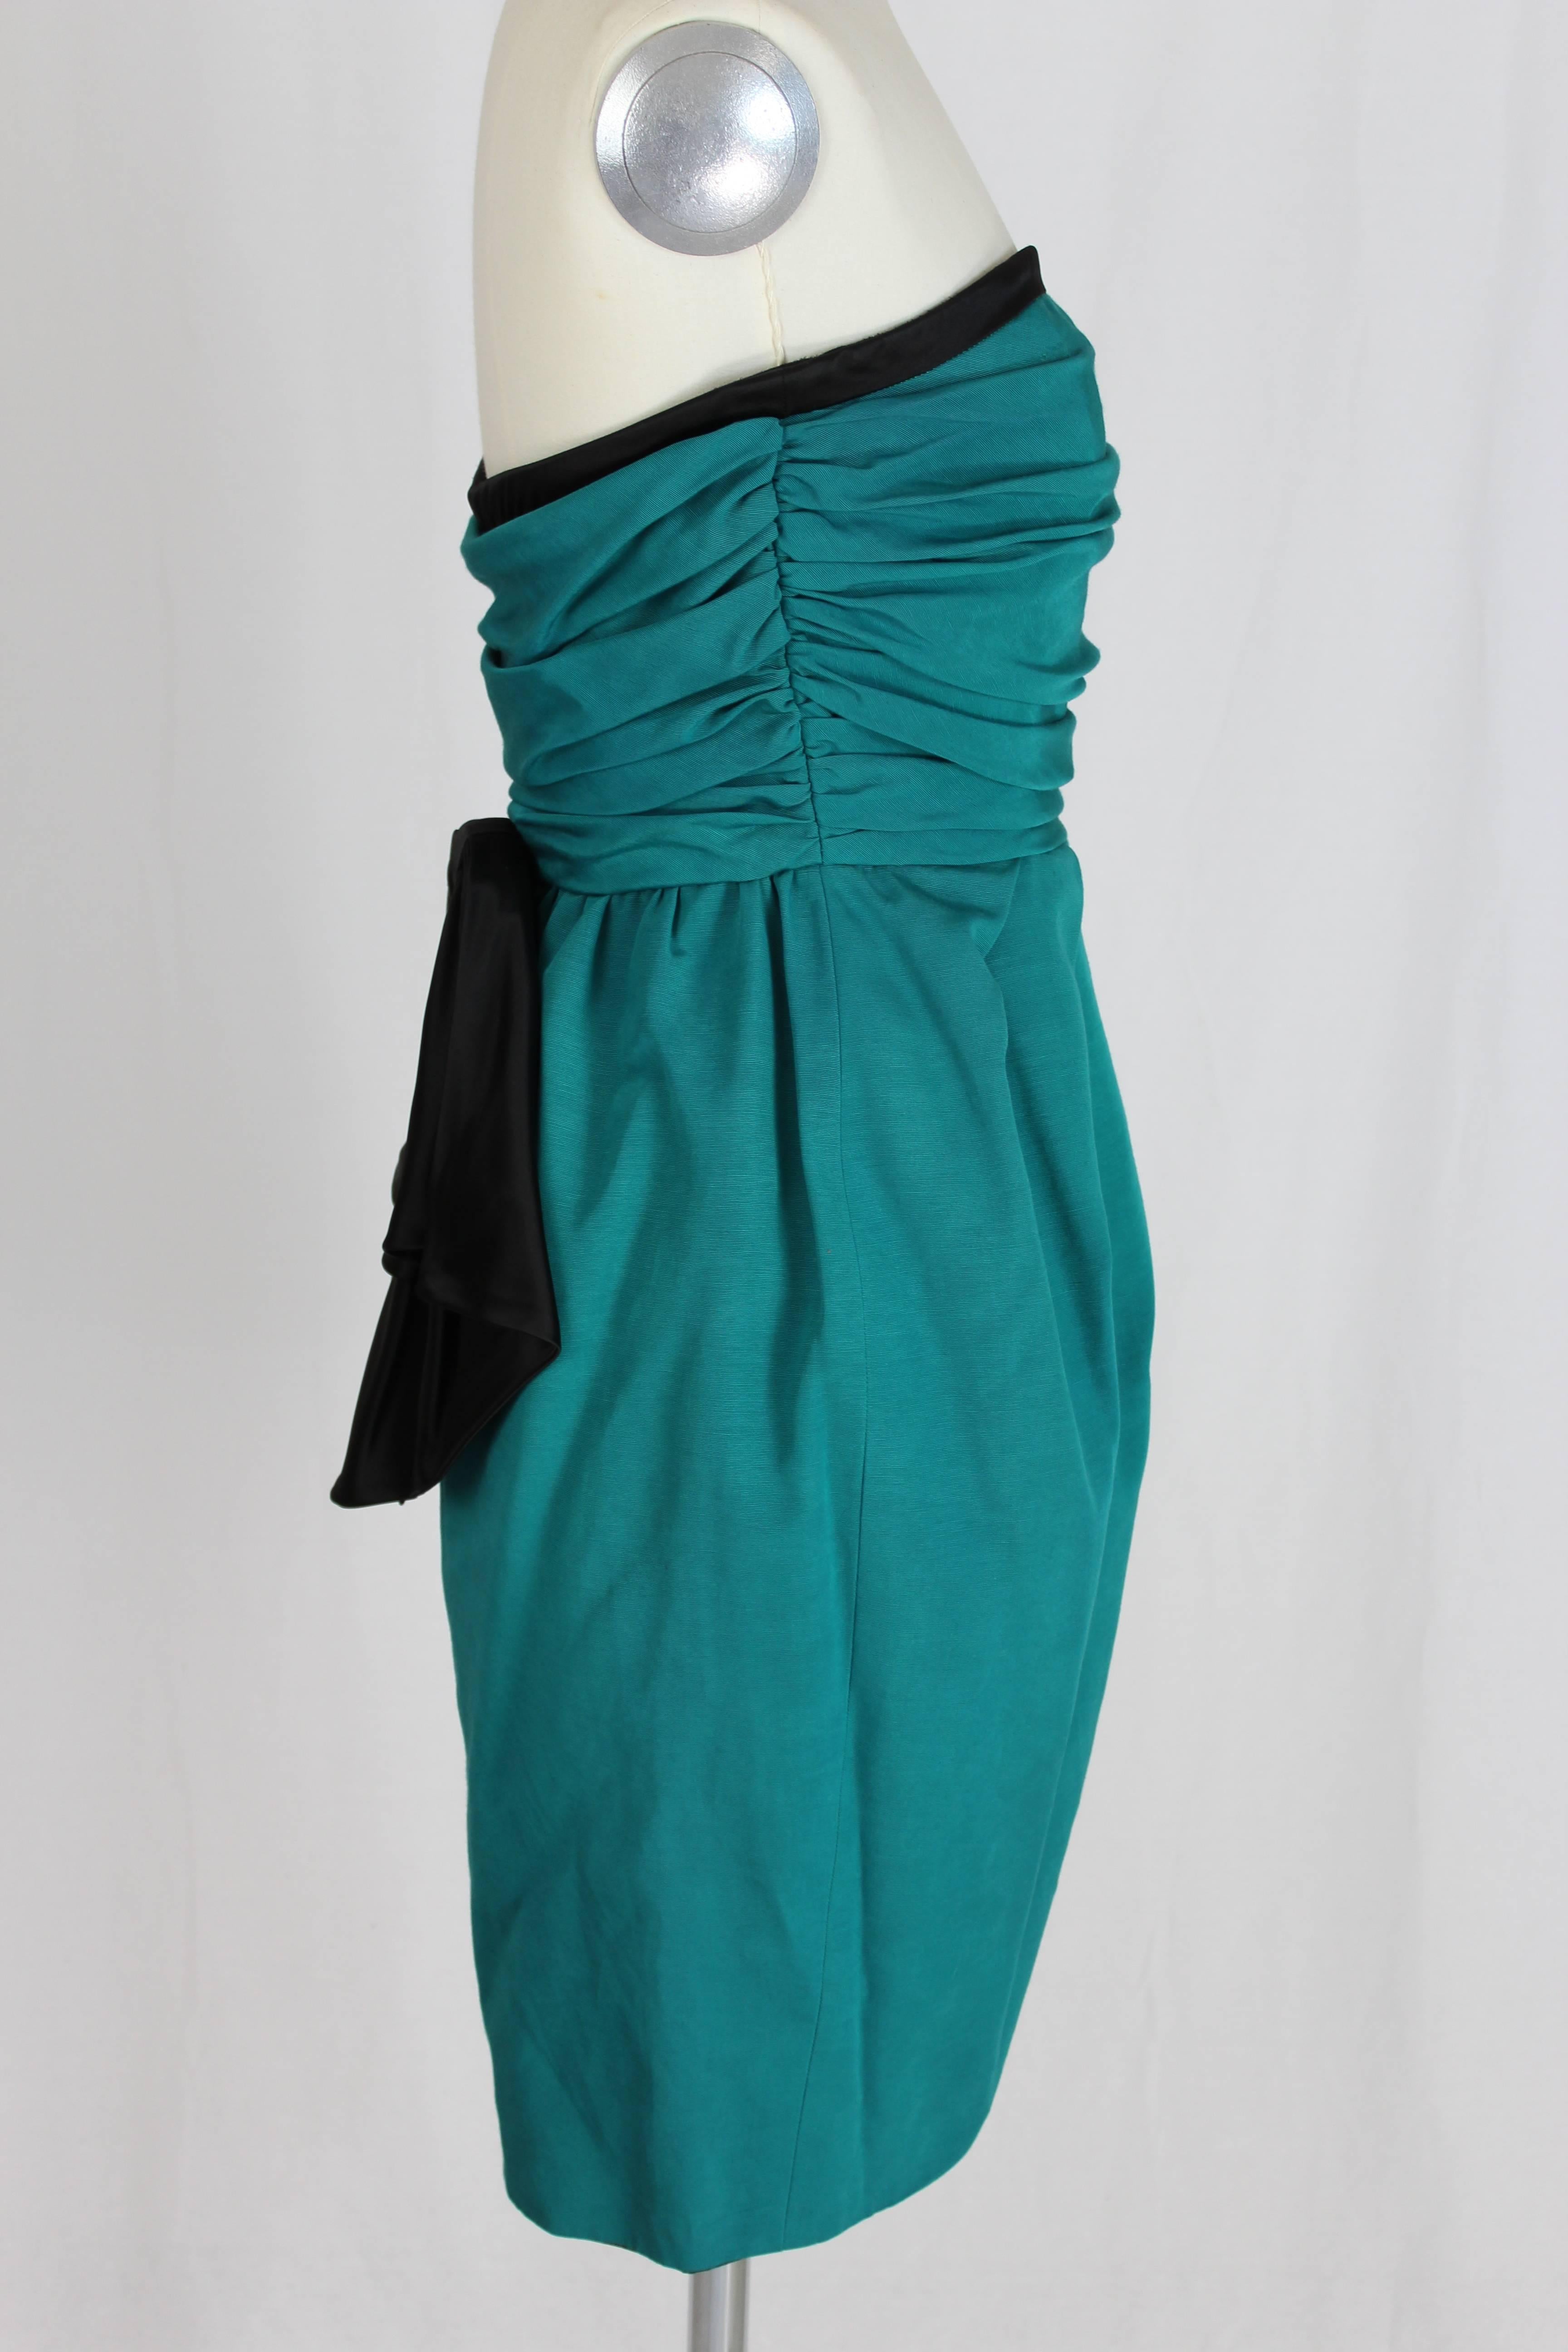 1980s Christian Dior Green Emerald Sheath Dress 2